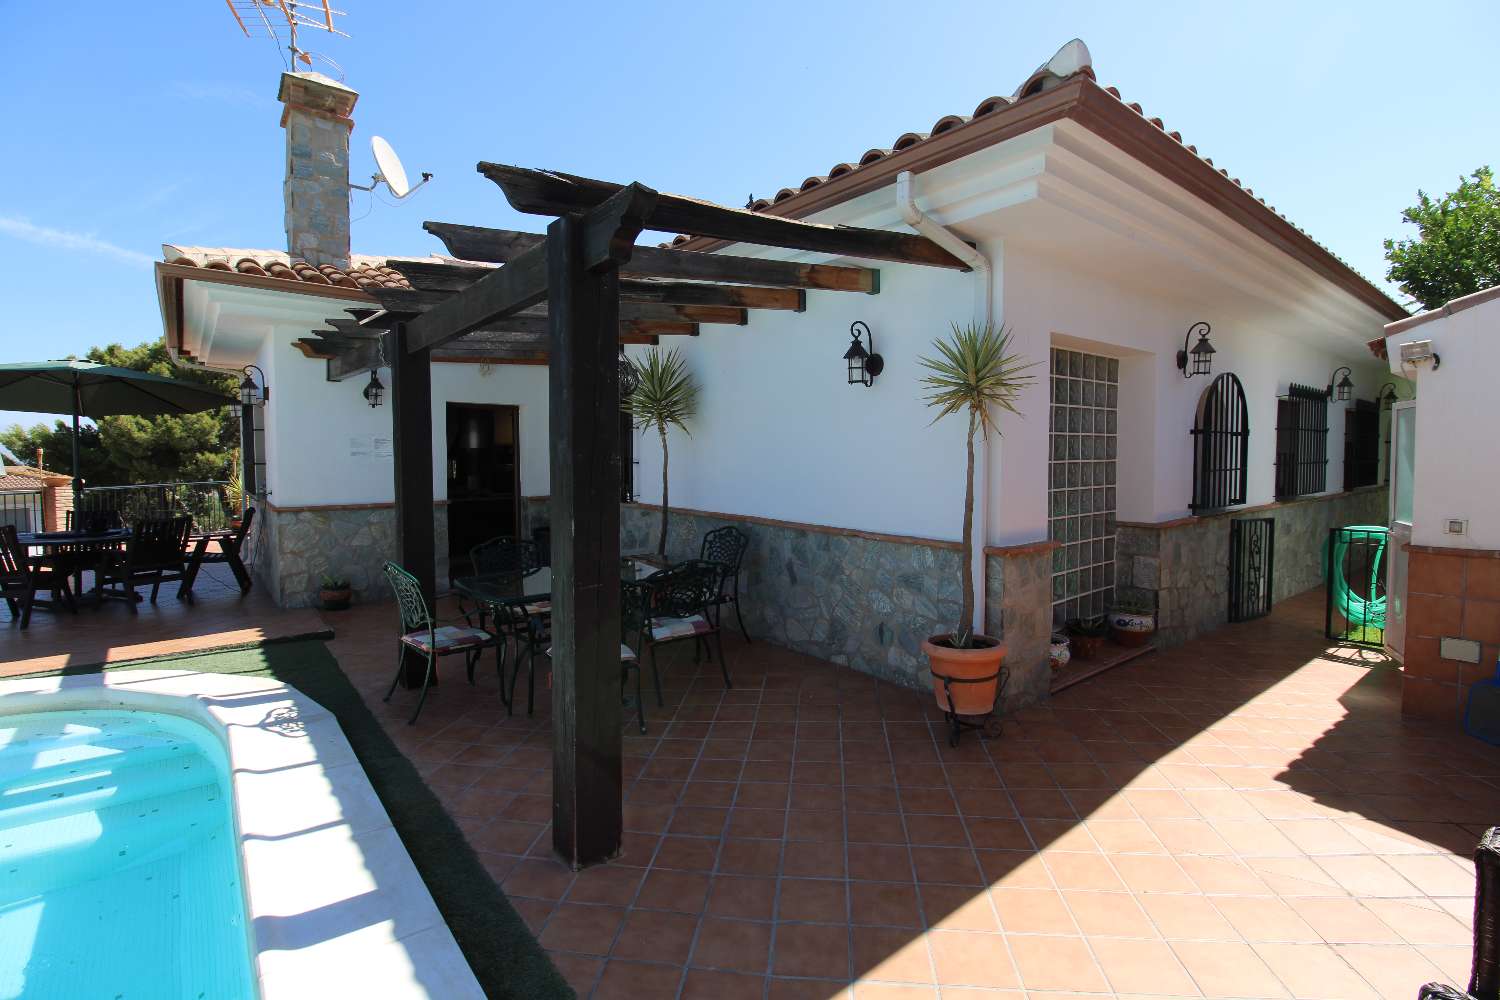 Independent villa located in the El Lagar urbanization